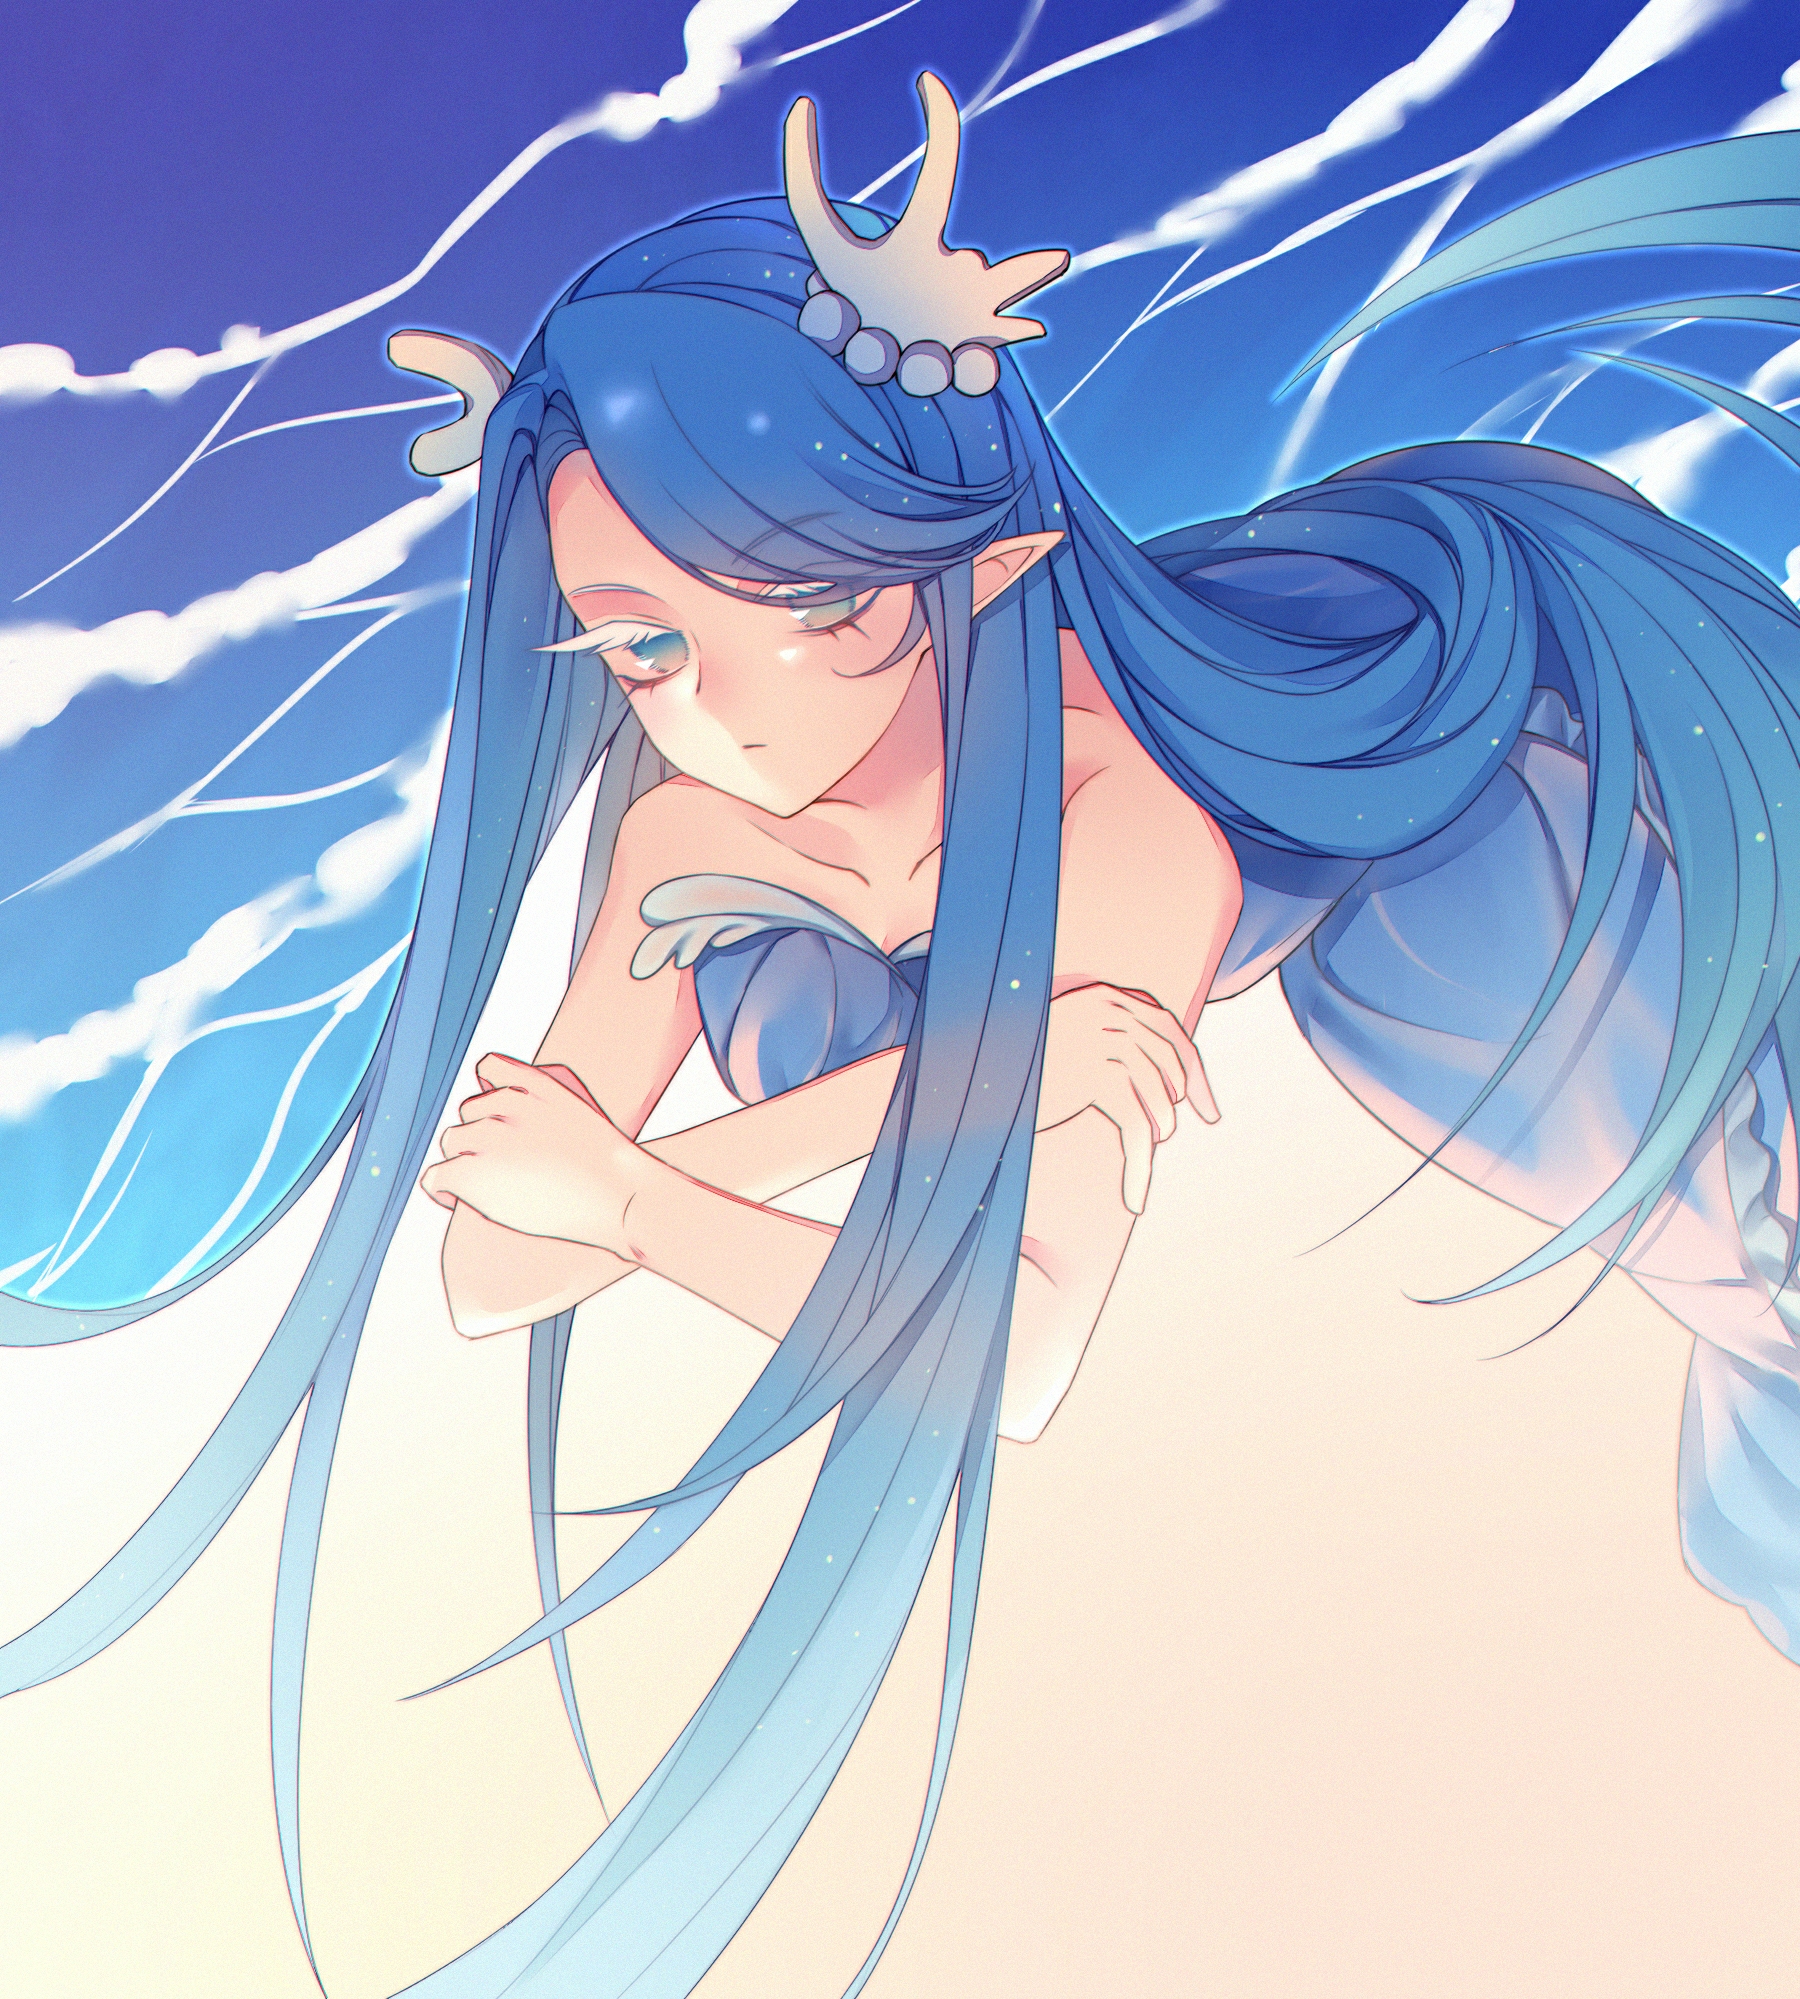 Sea Fairy Cookie Run Zerochan Anime Image Board